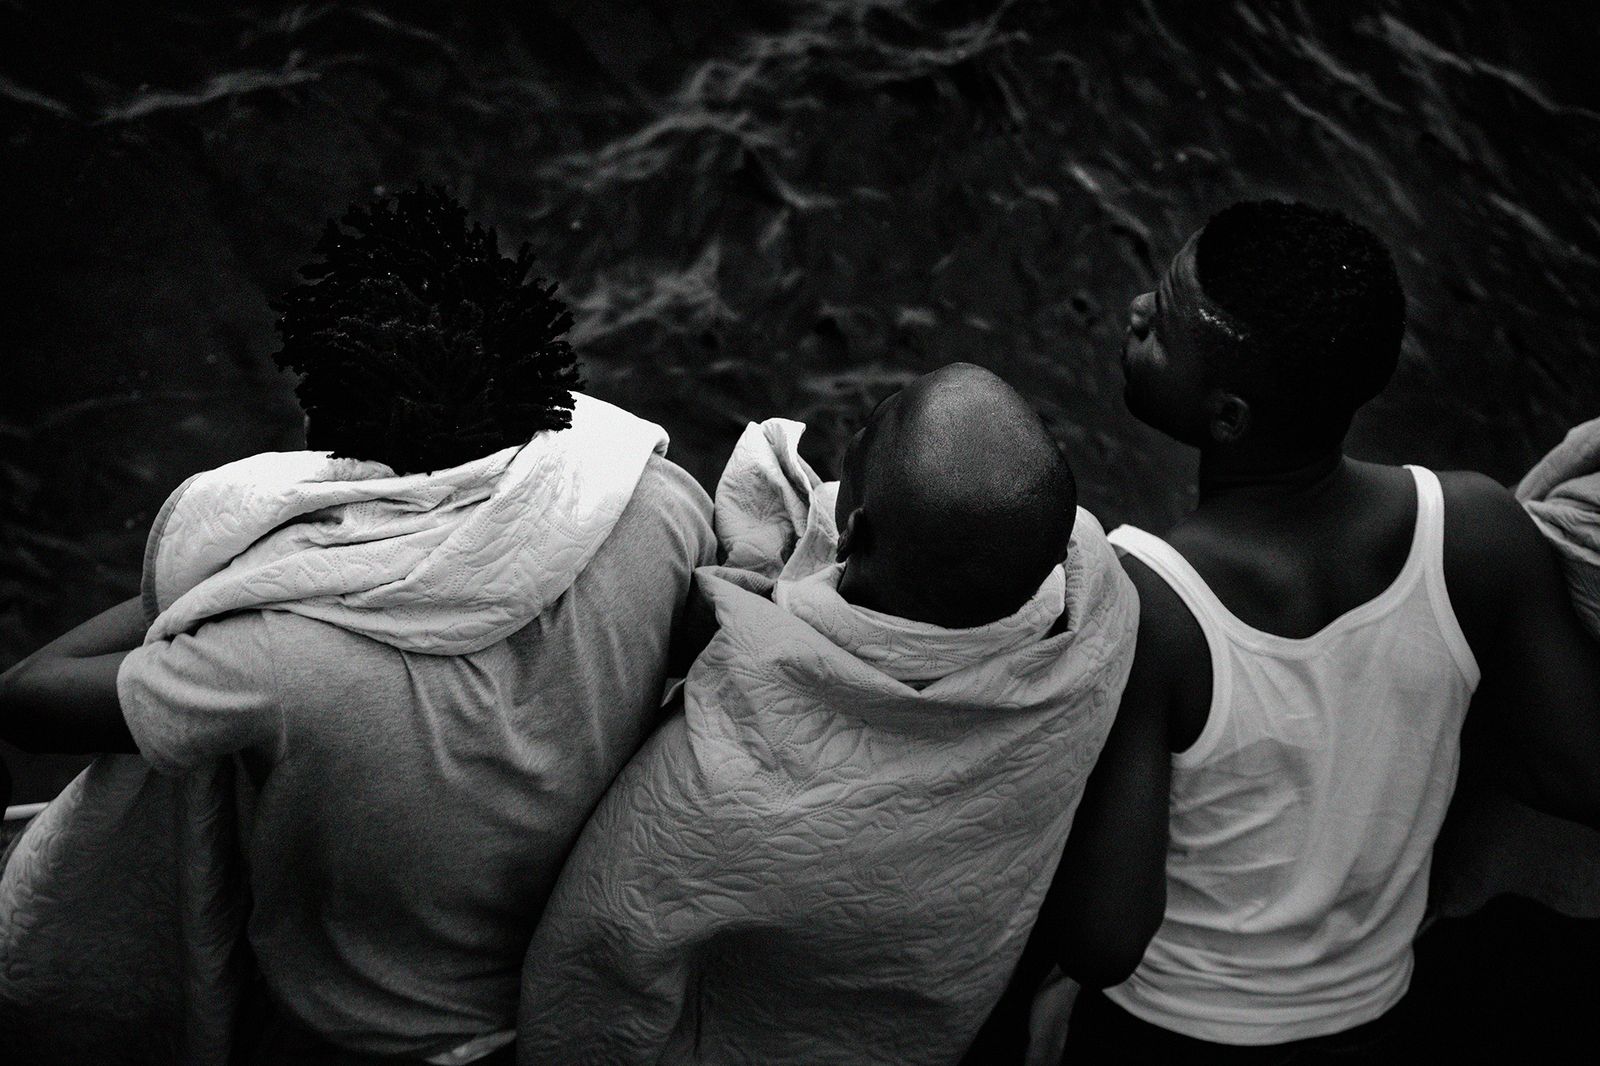 © Francesco Bellina - Rescued men on board of the ship "Mare Jonio".